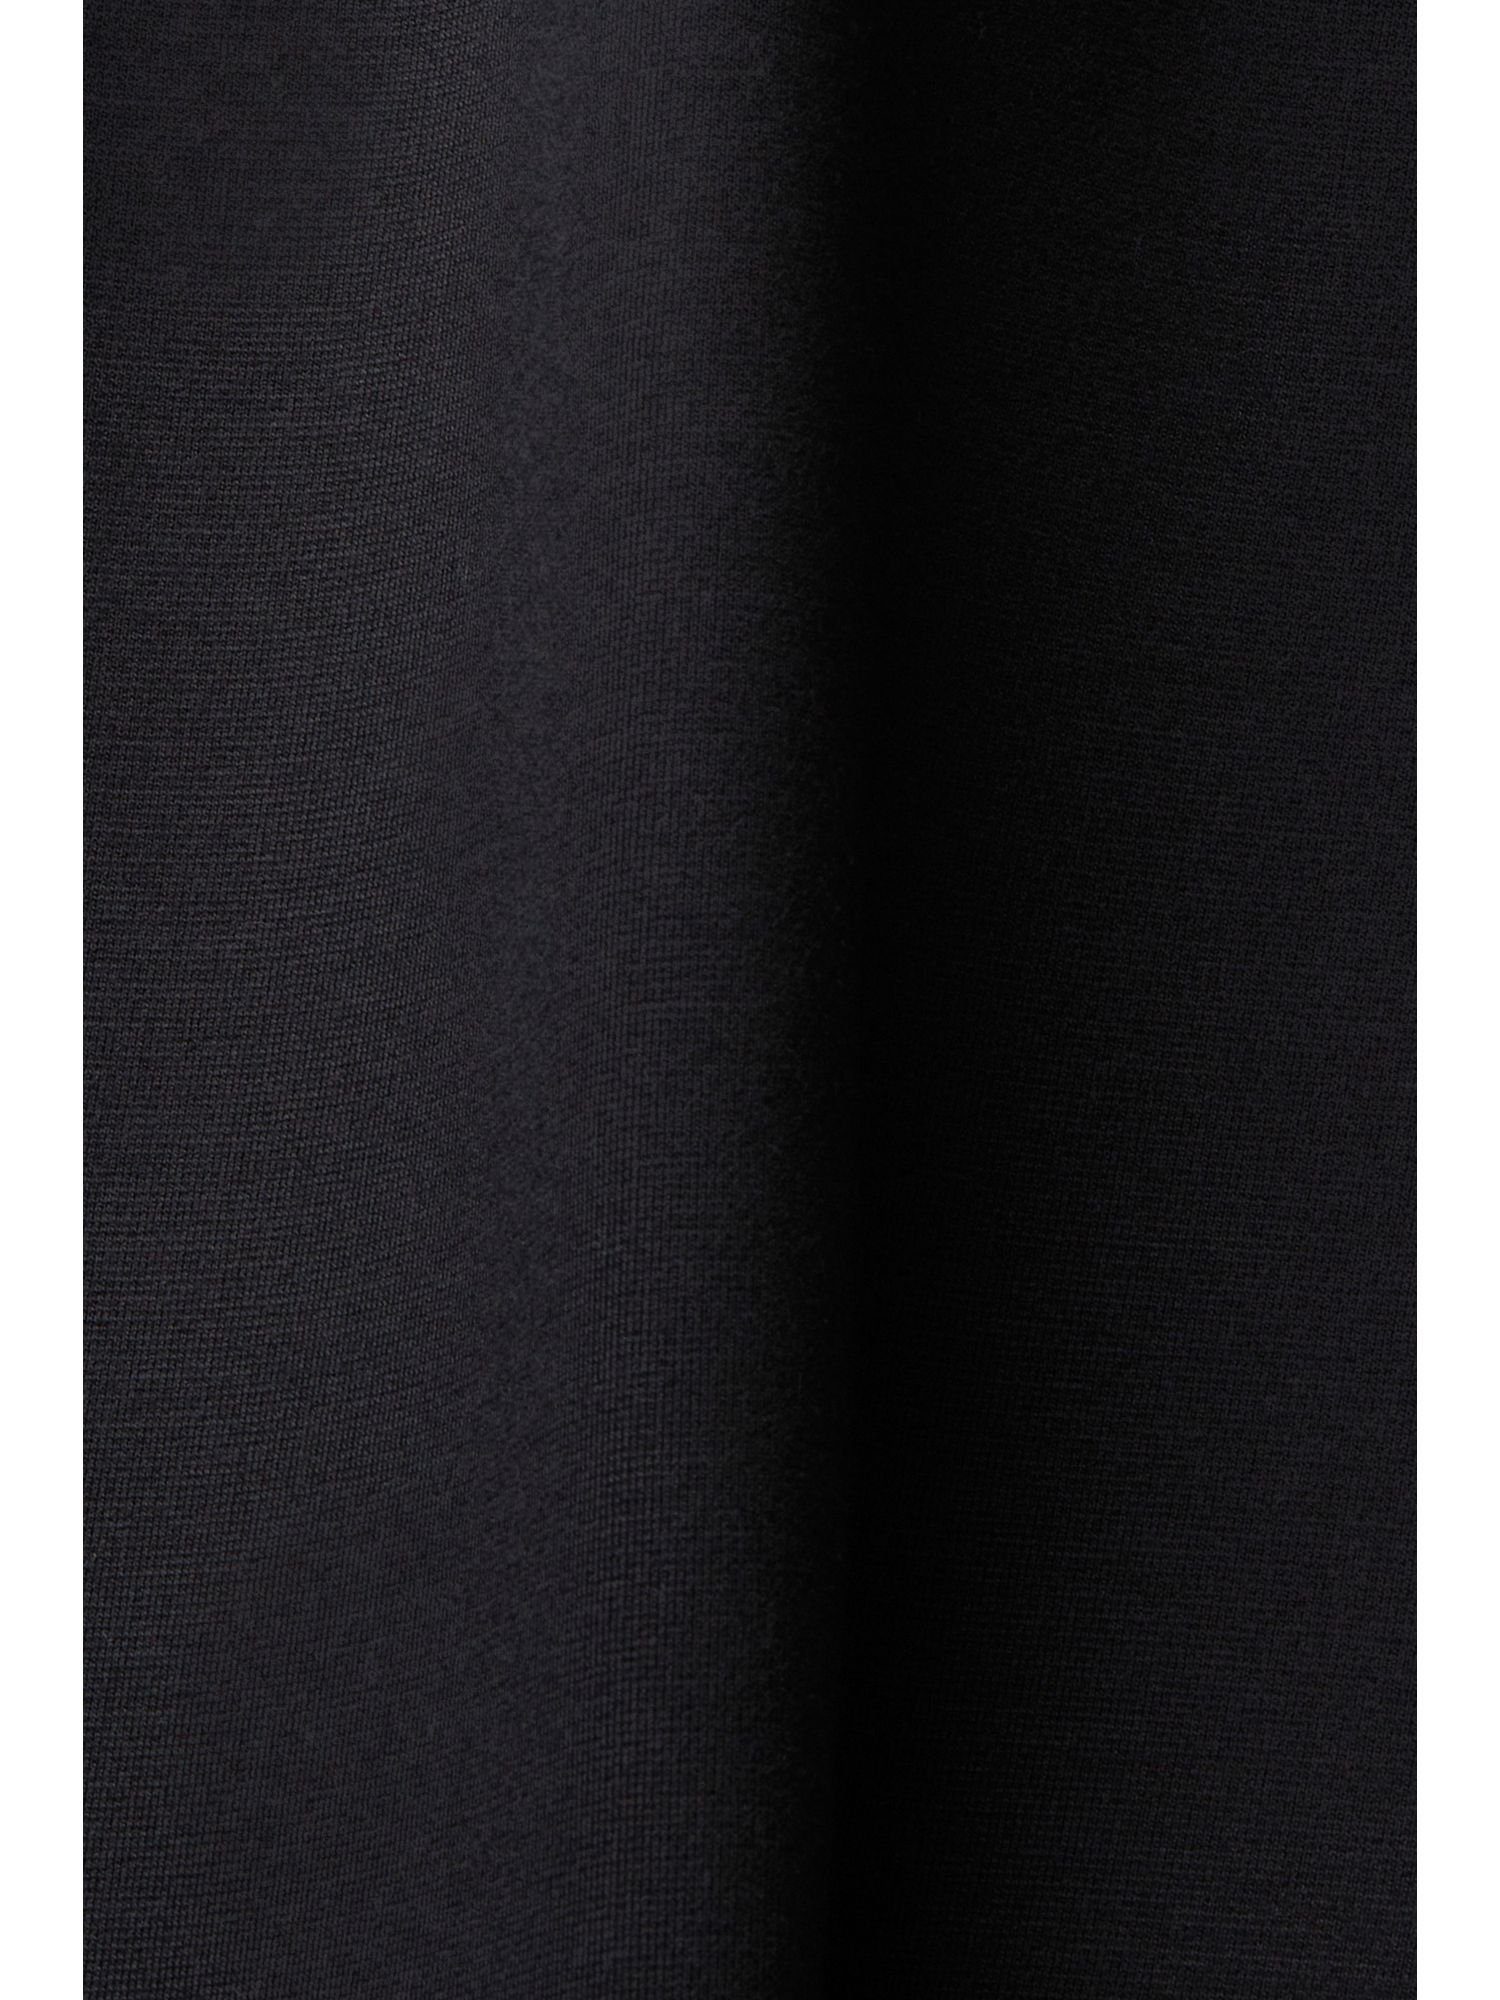 BLACK Esprit Midikleid Jersey-Polokleid Reißverschluss mit